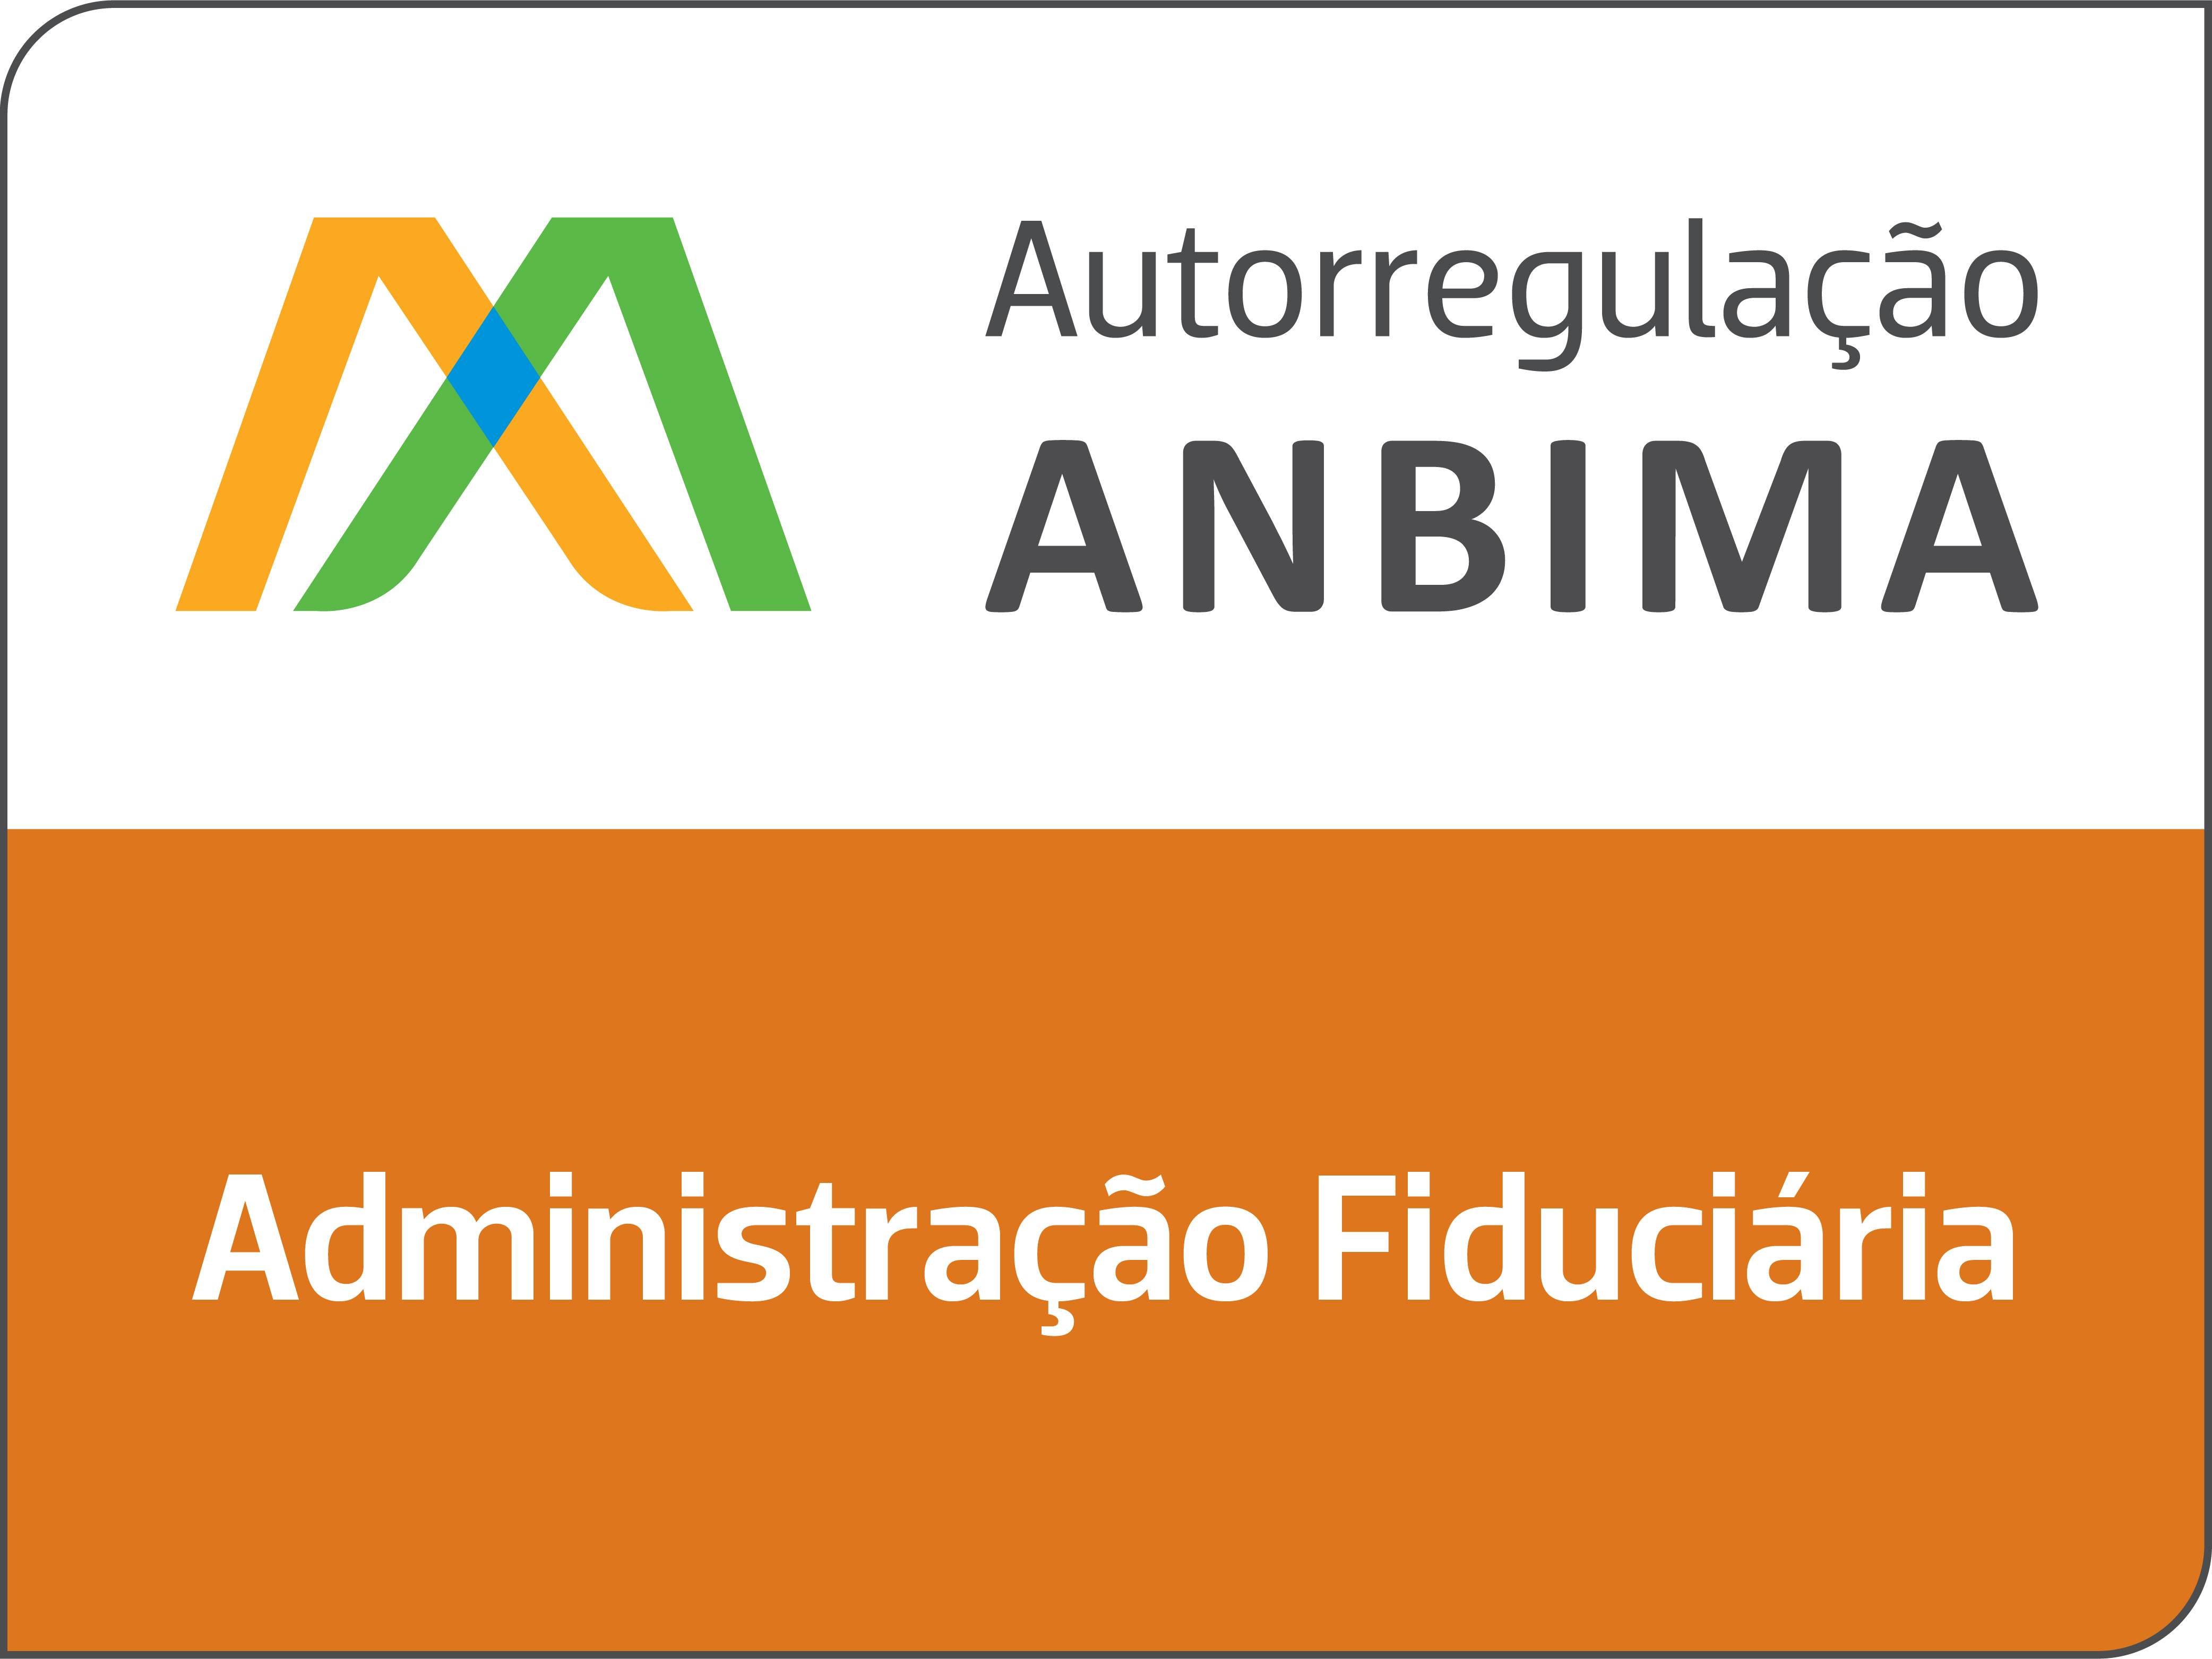 AMBIMA Logo - Permanent Trust Administration